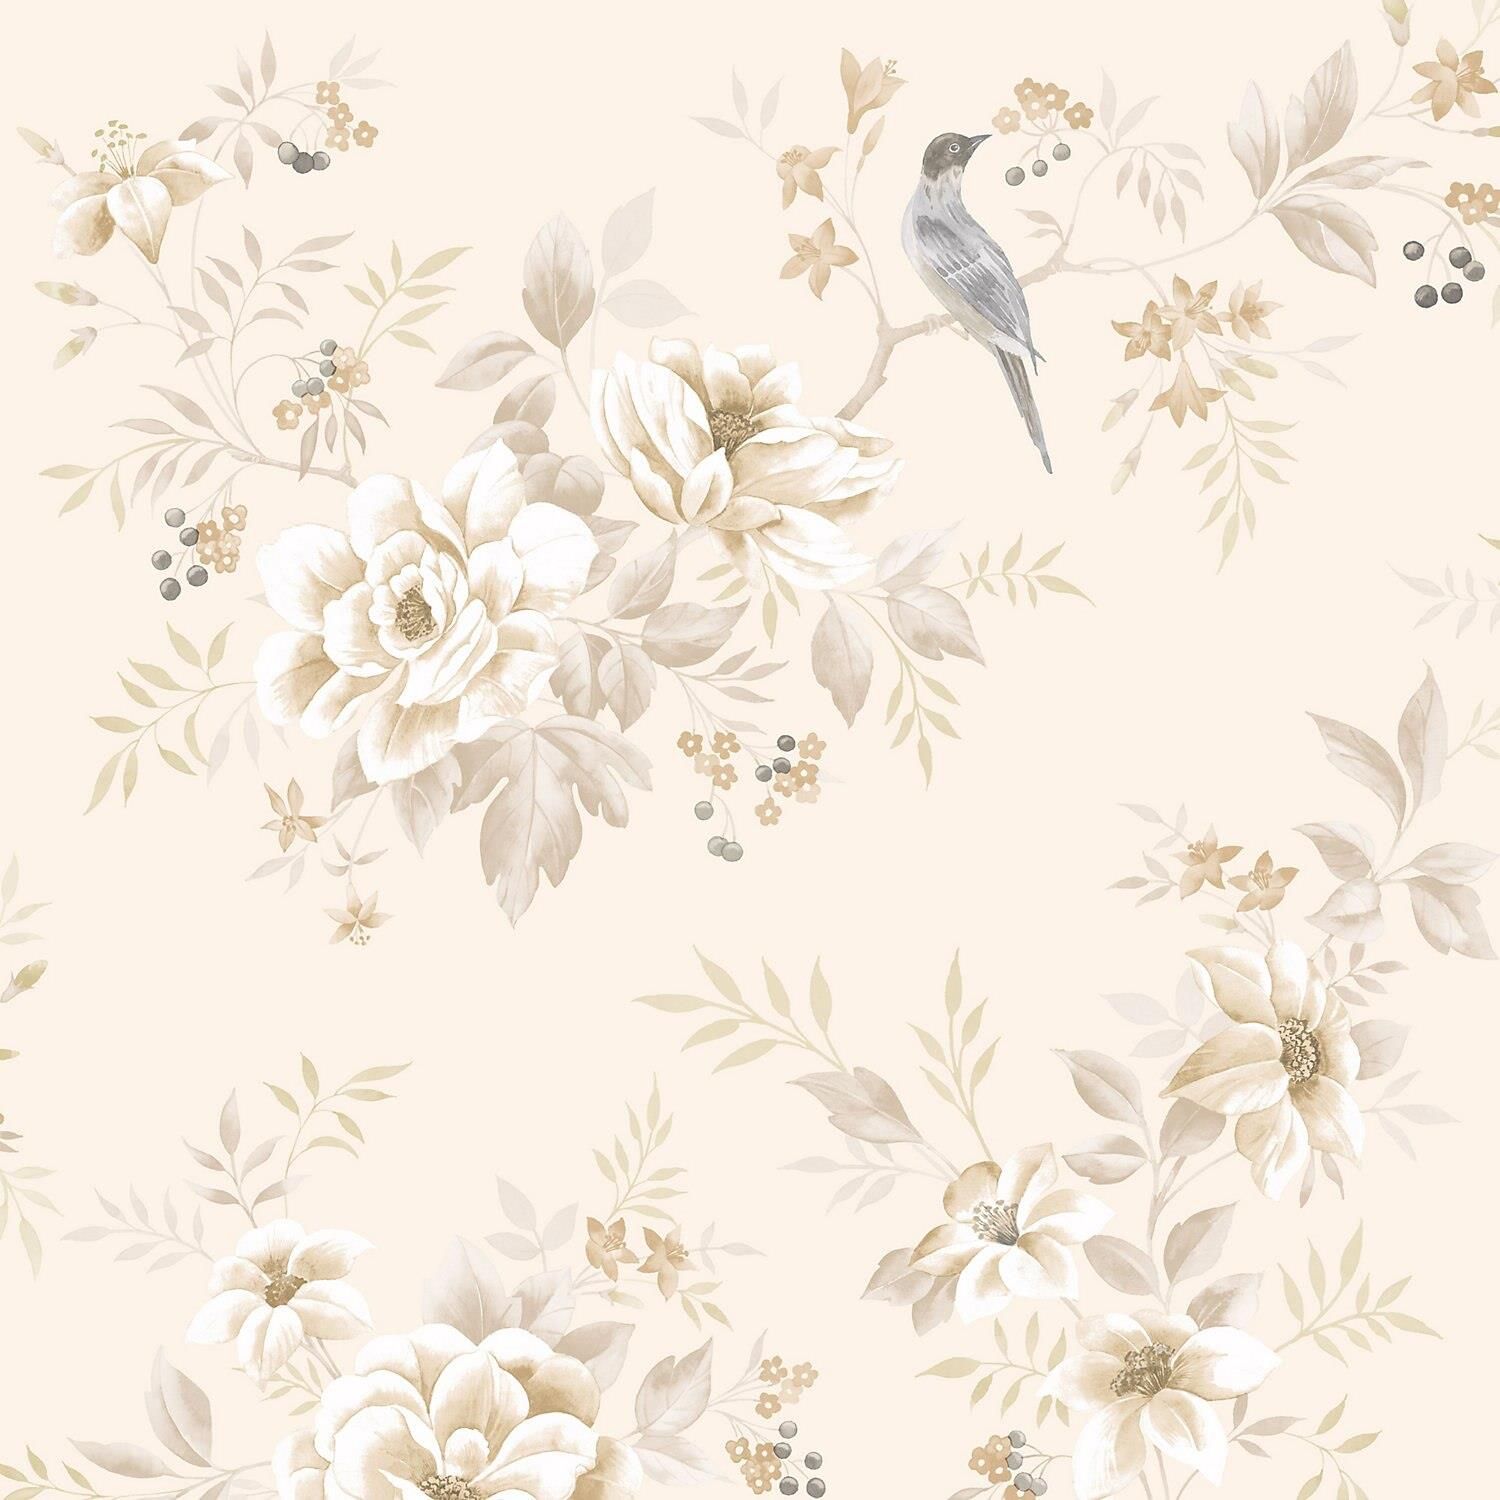 Fine Decor Liora Natural Cream Beige Floral Glitter Wallpaper Leaf Paste Wall